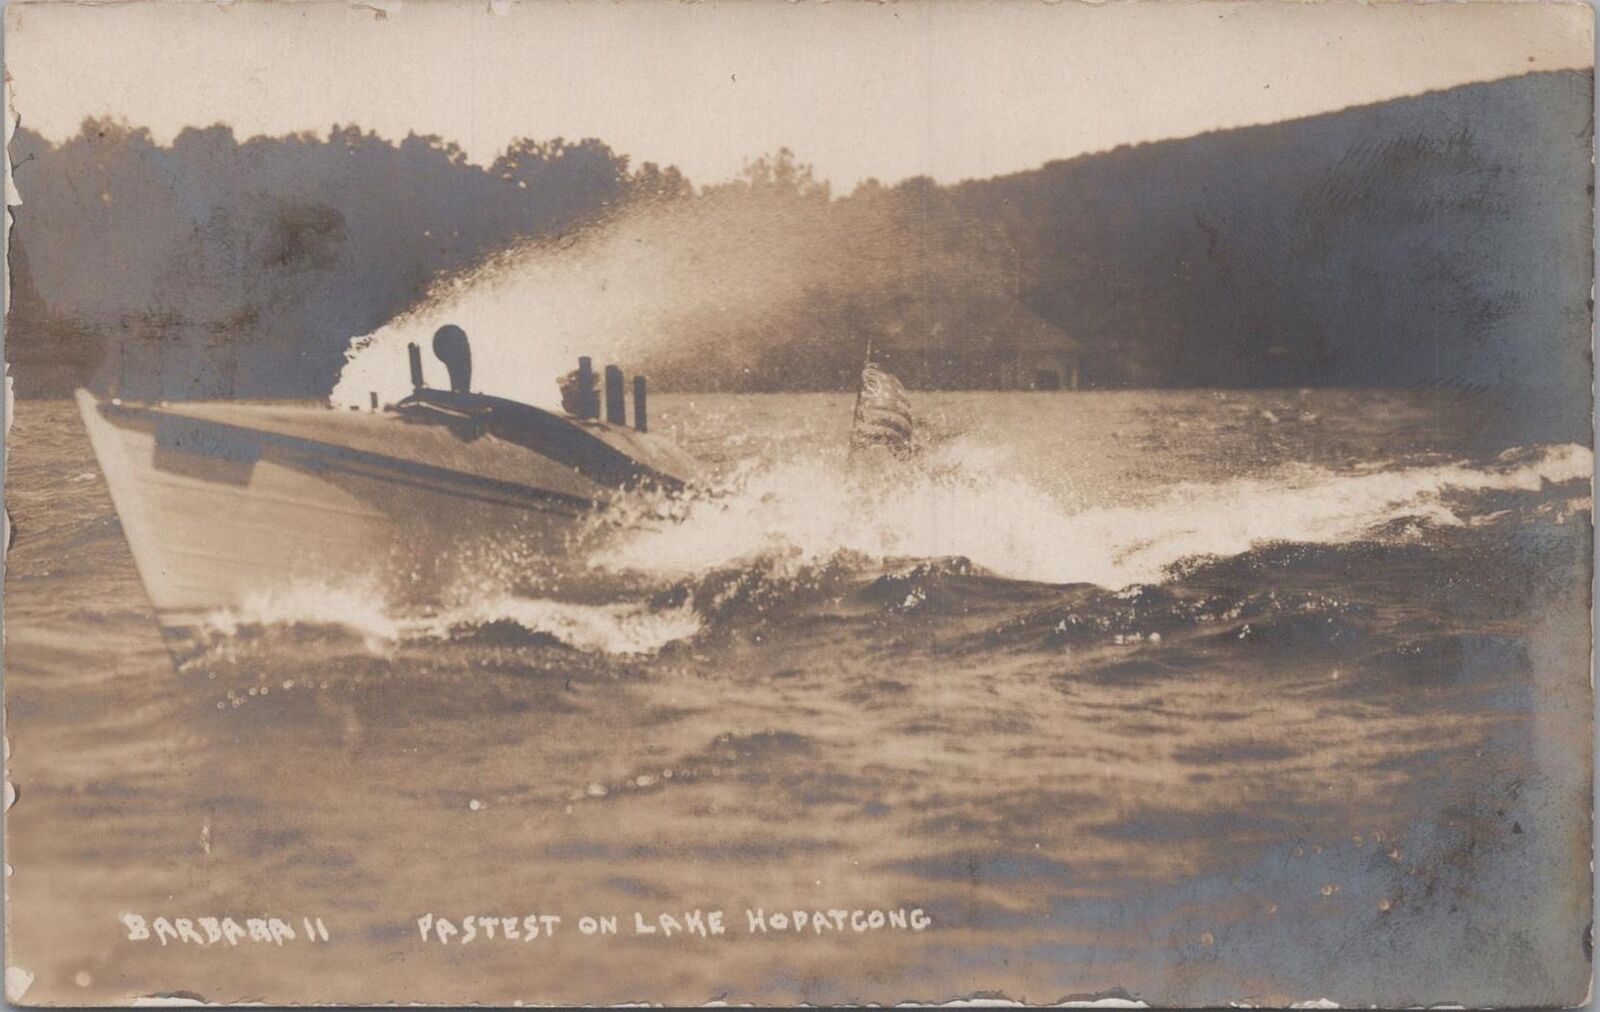 RPPC Postcard Boat Barbara II Fastest on Lake Hopatcong NJ 